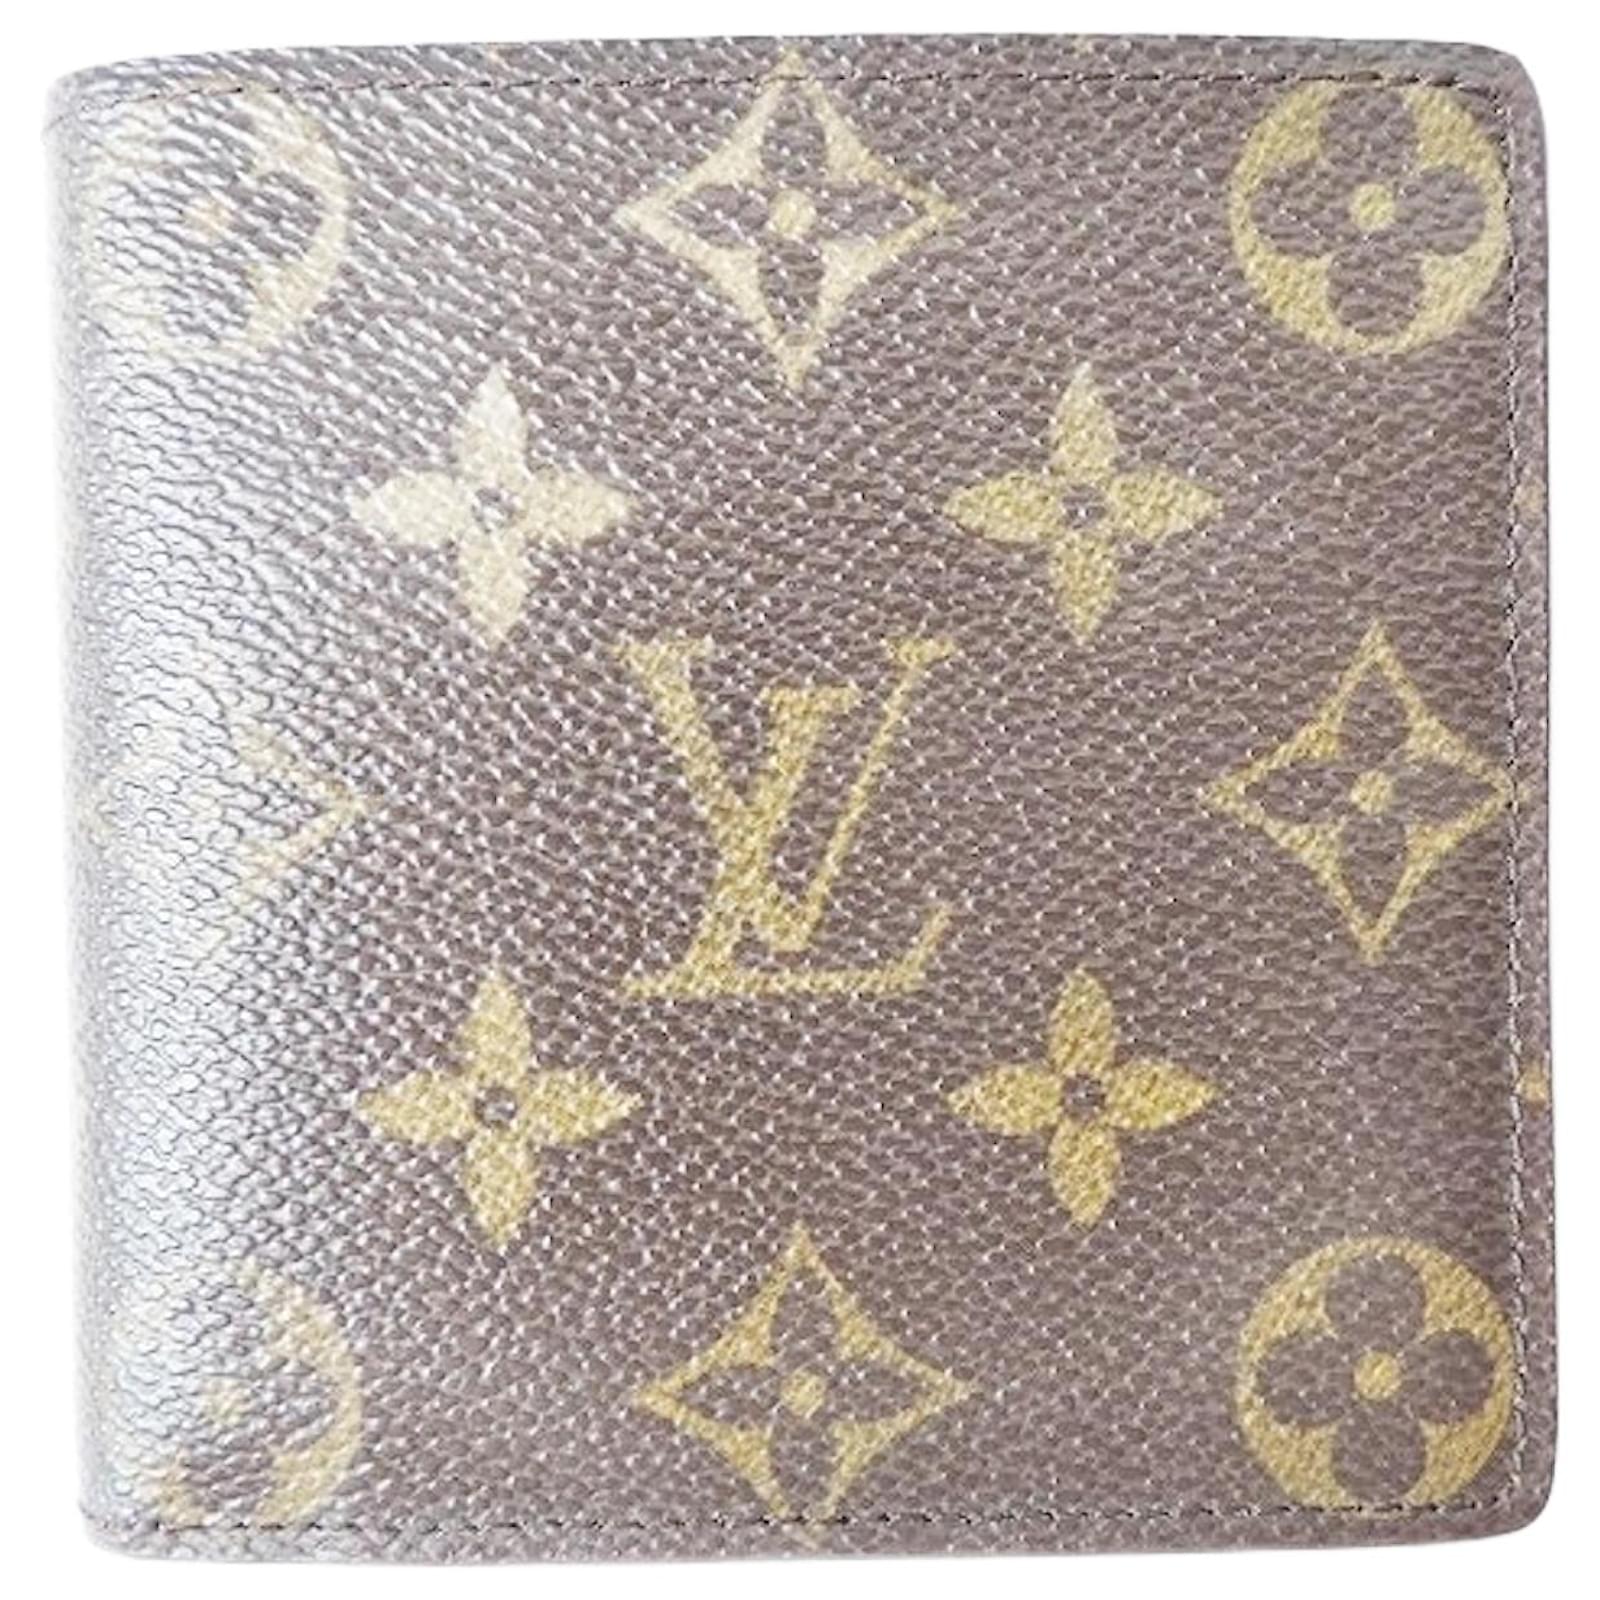 Louis Vuitton Marco Wallet Monogram Brown